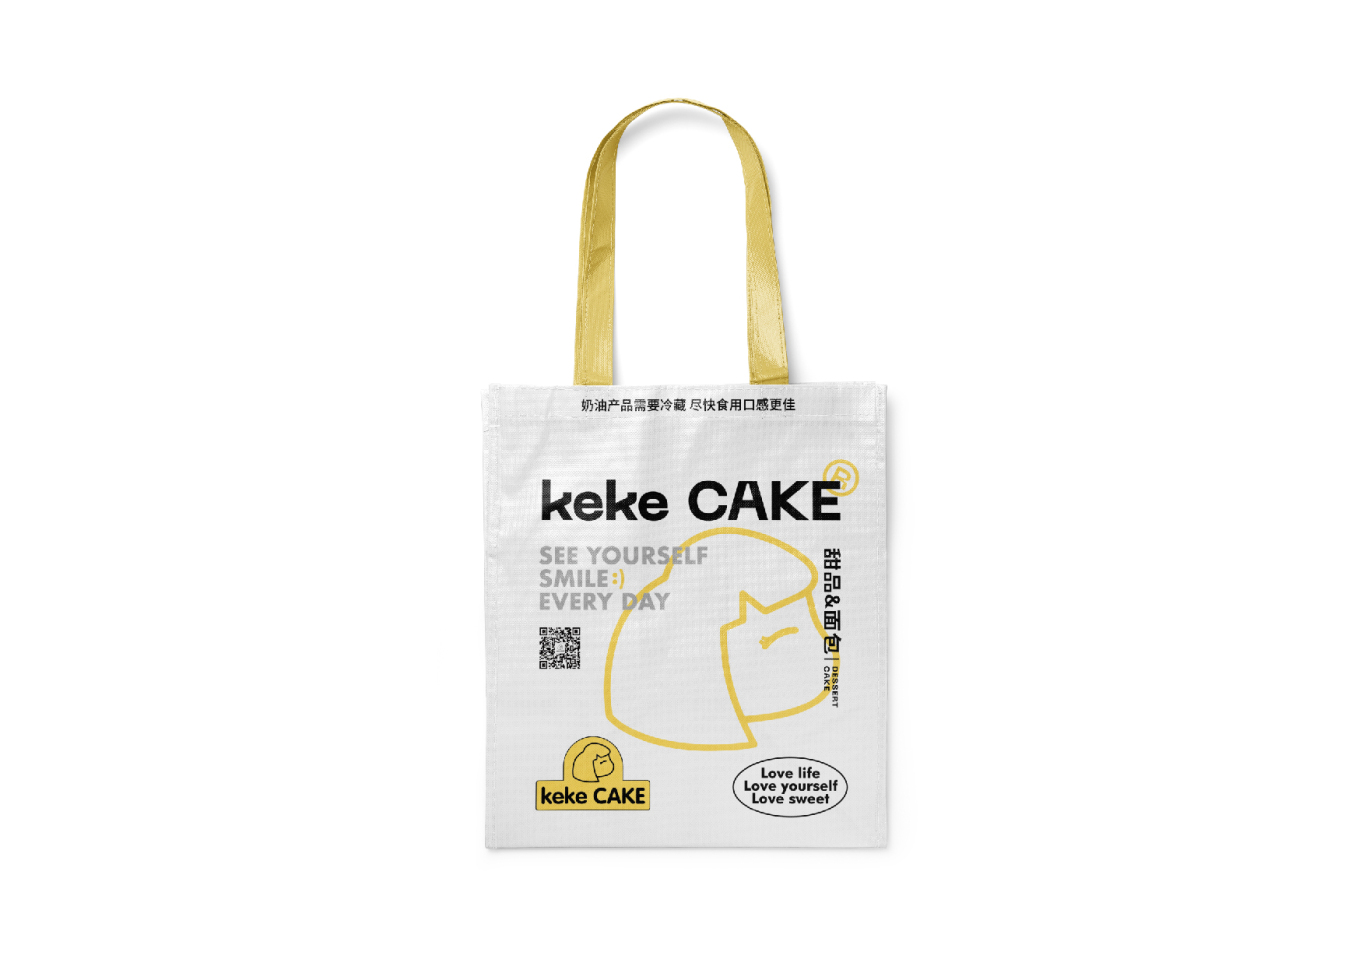 keke CAKE手提袋设计图1